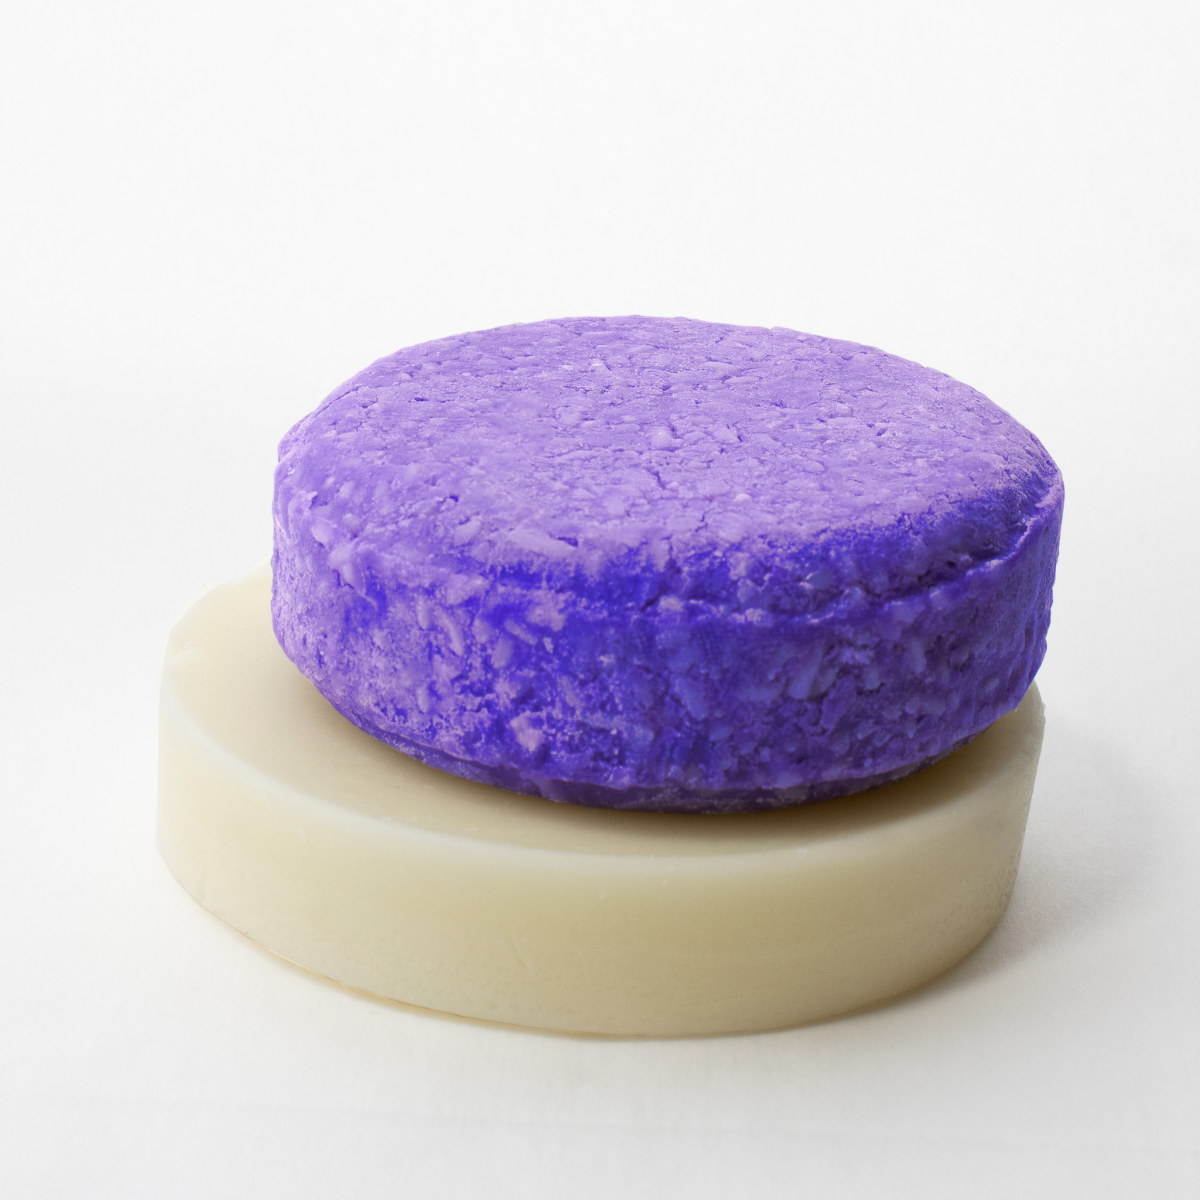 a purple sponge sitting on top of a soap bar